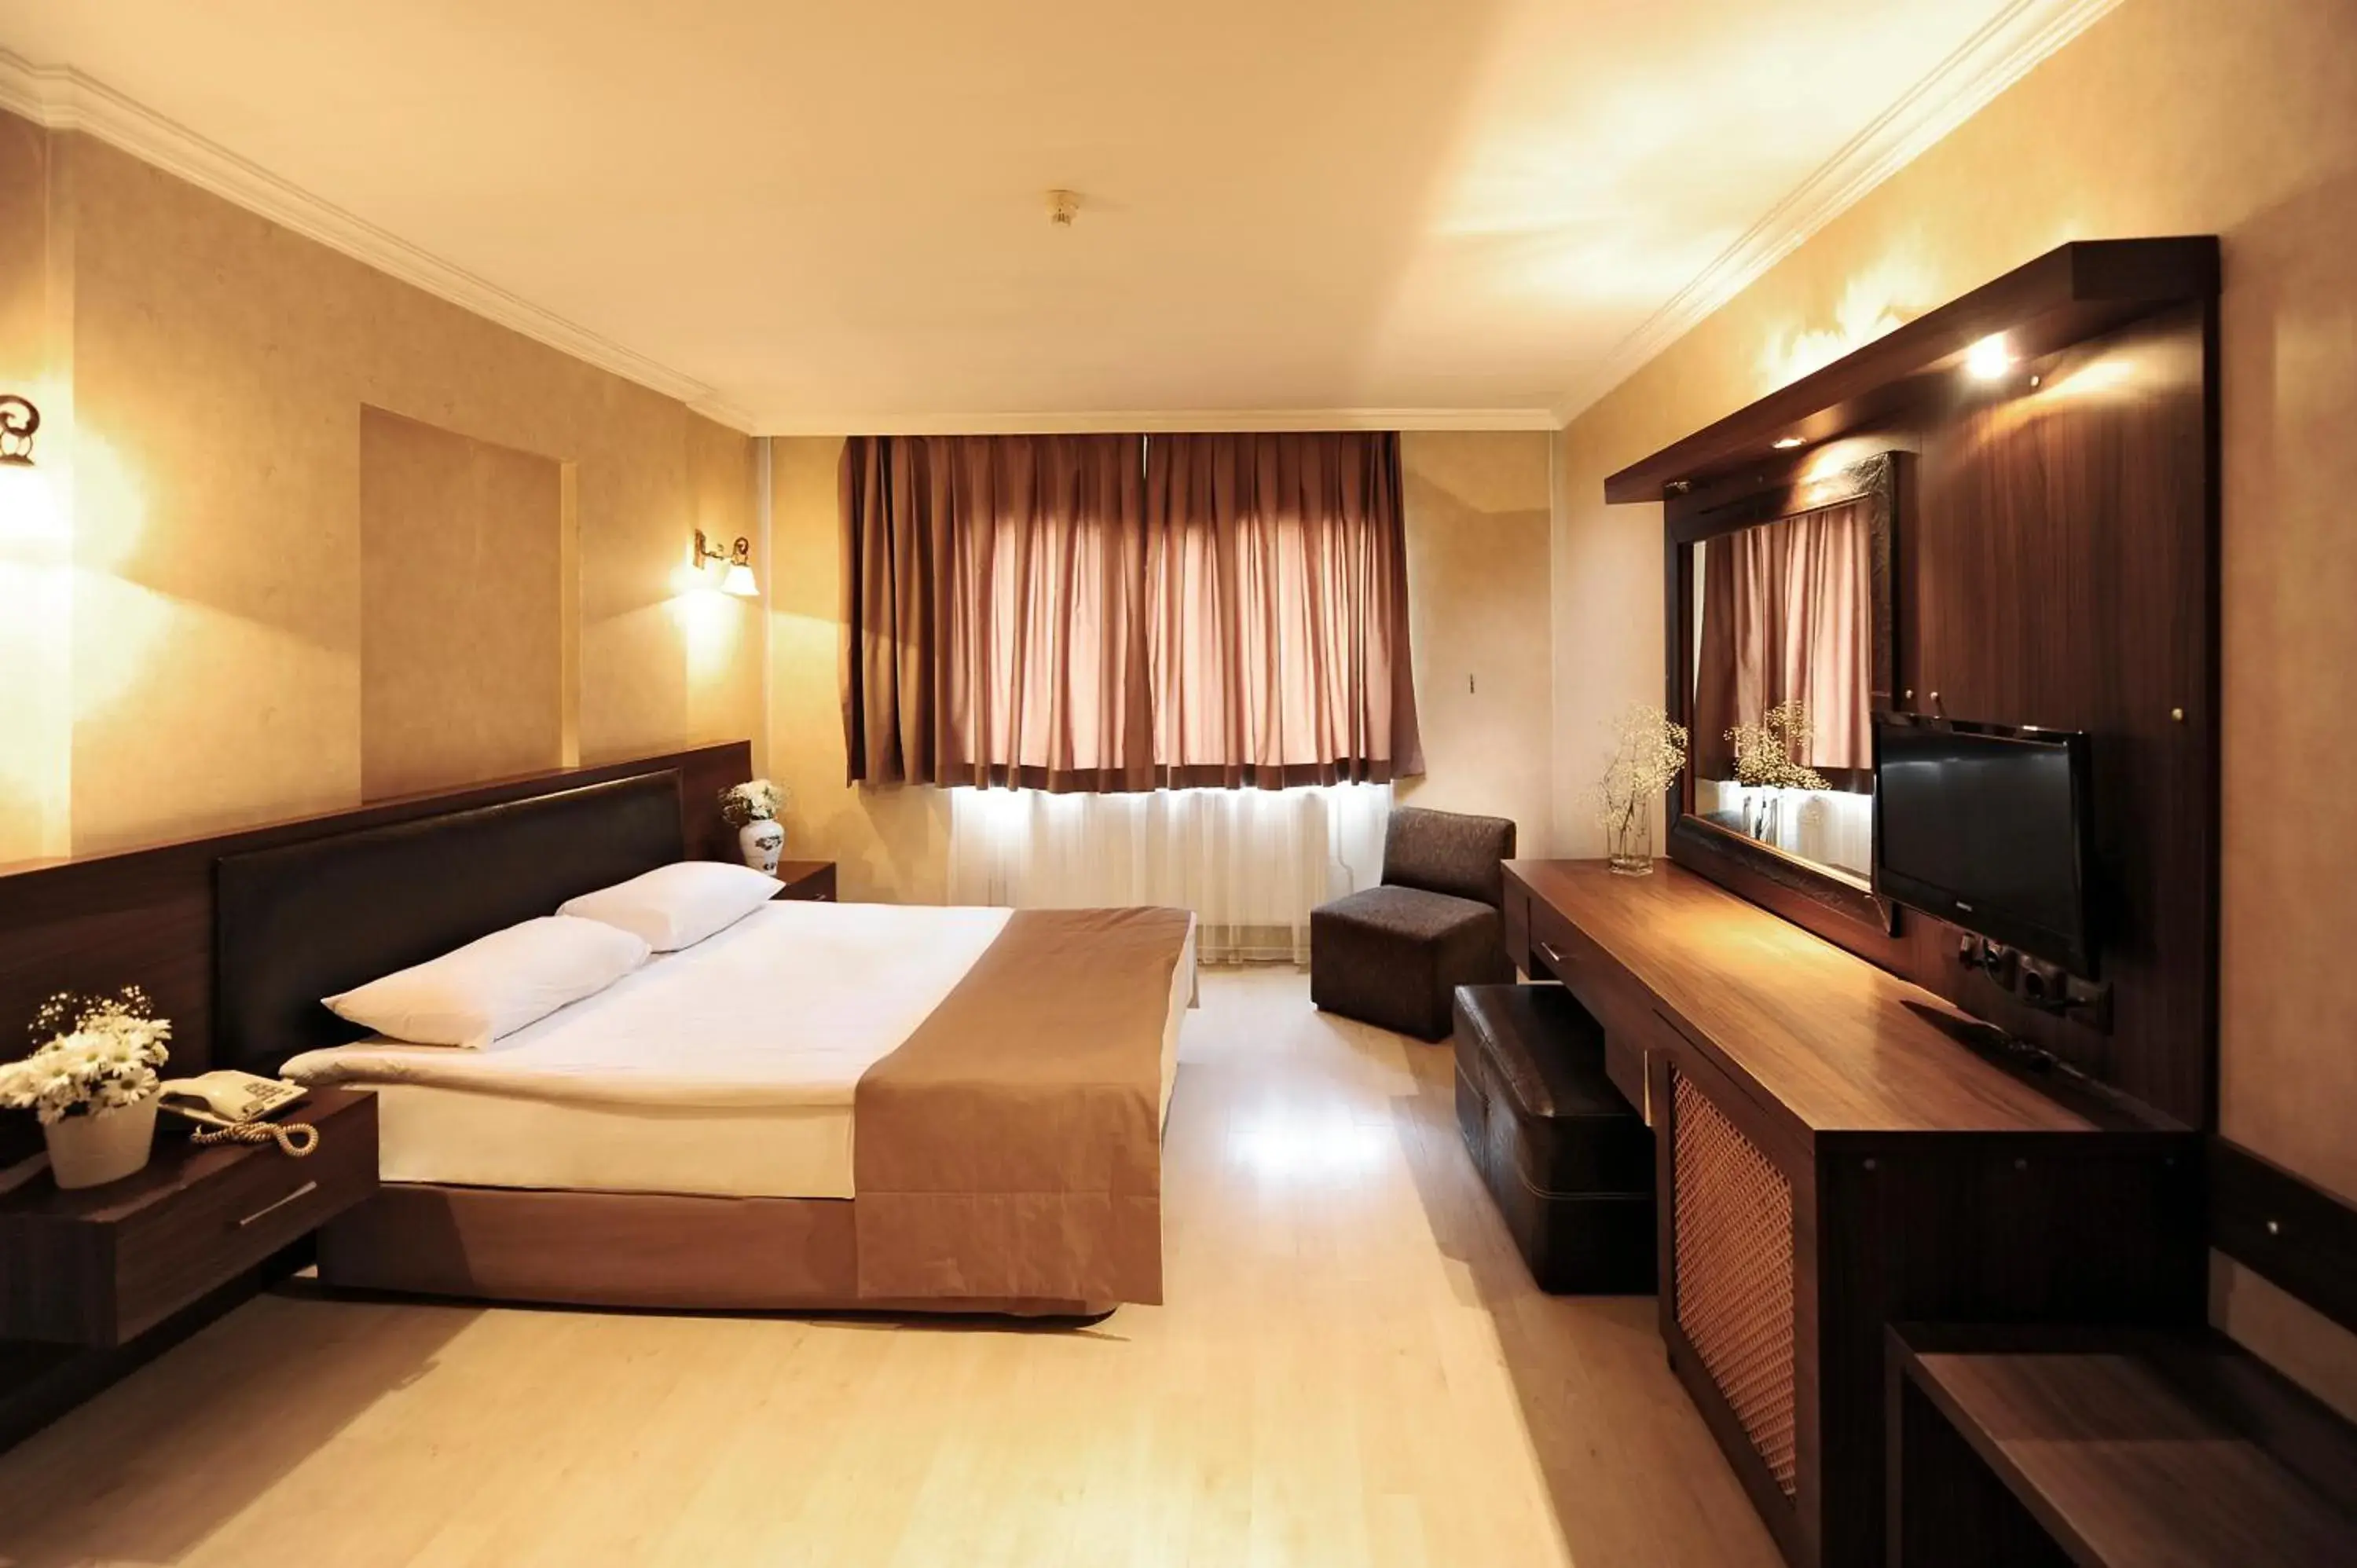 Bedroom, TV/Entertainment Center in Ustun Hotel Alsancak